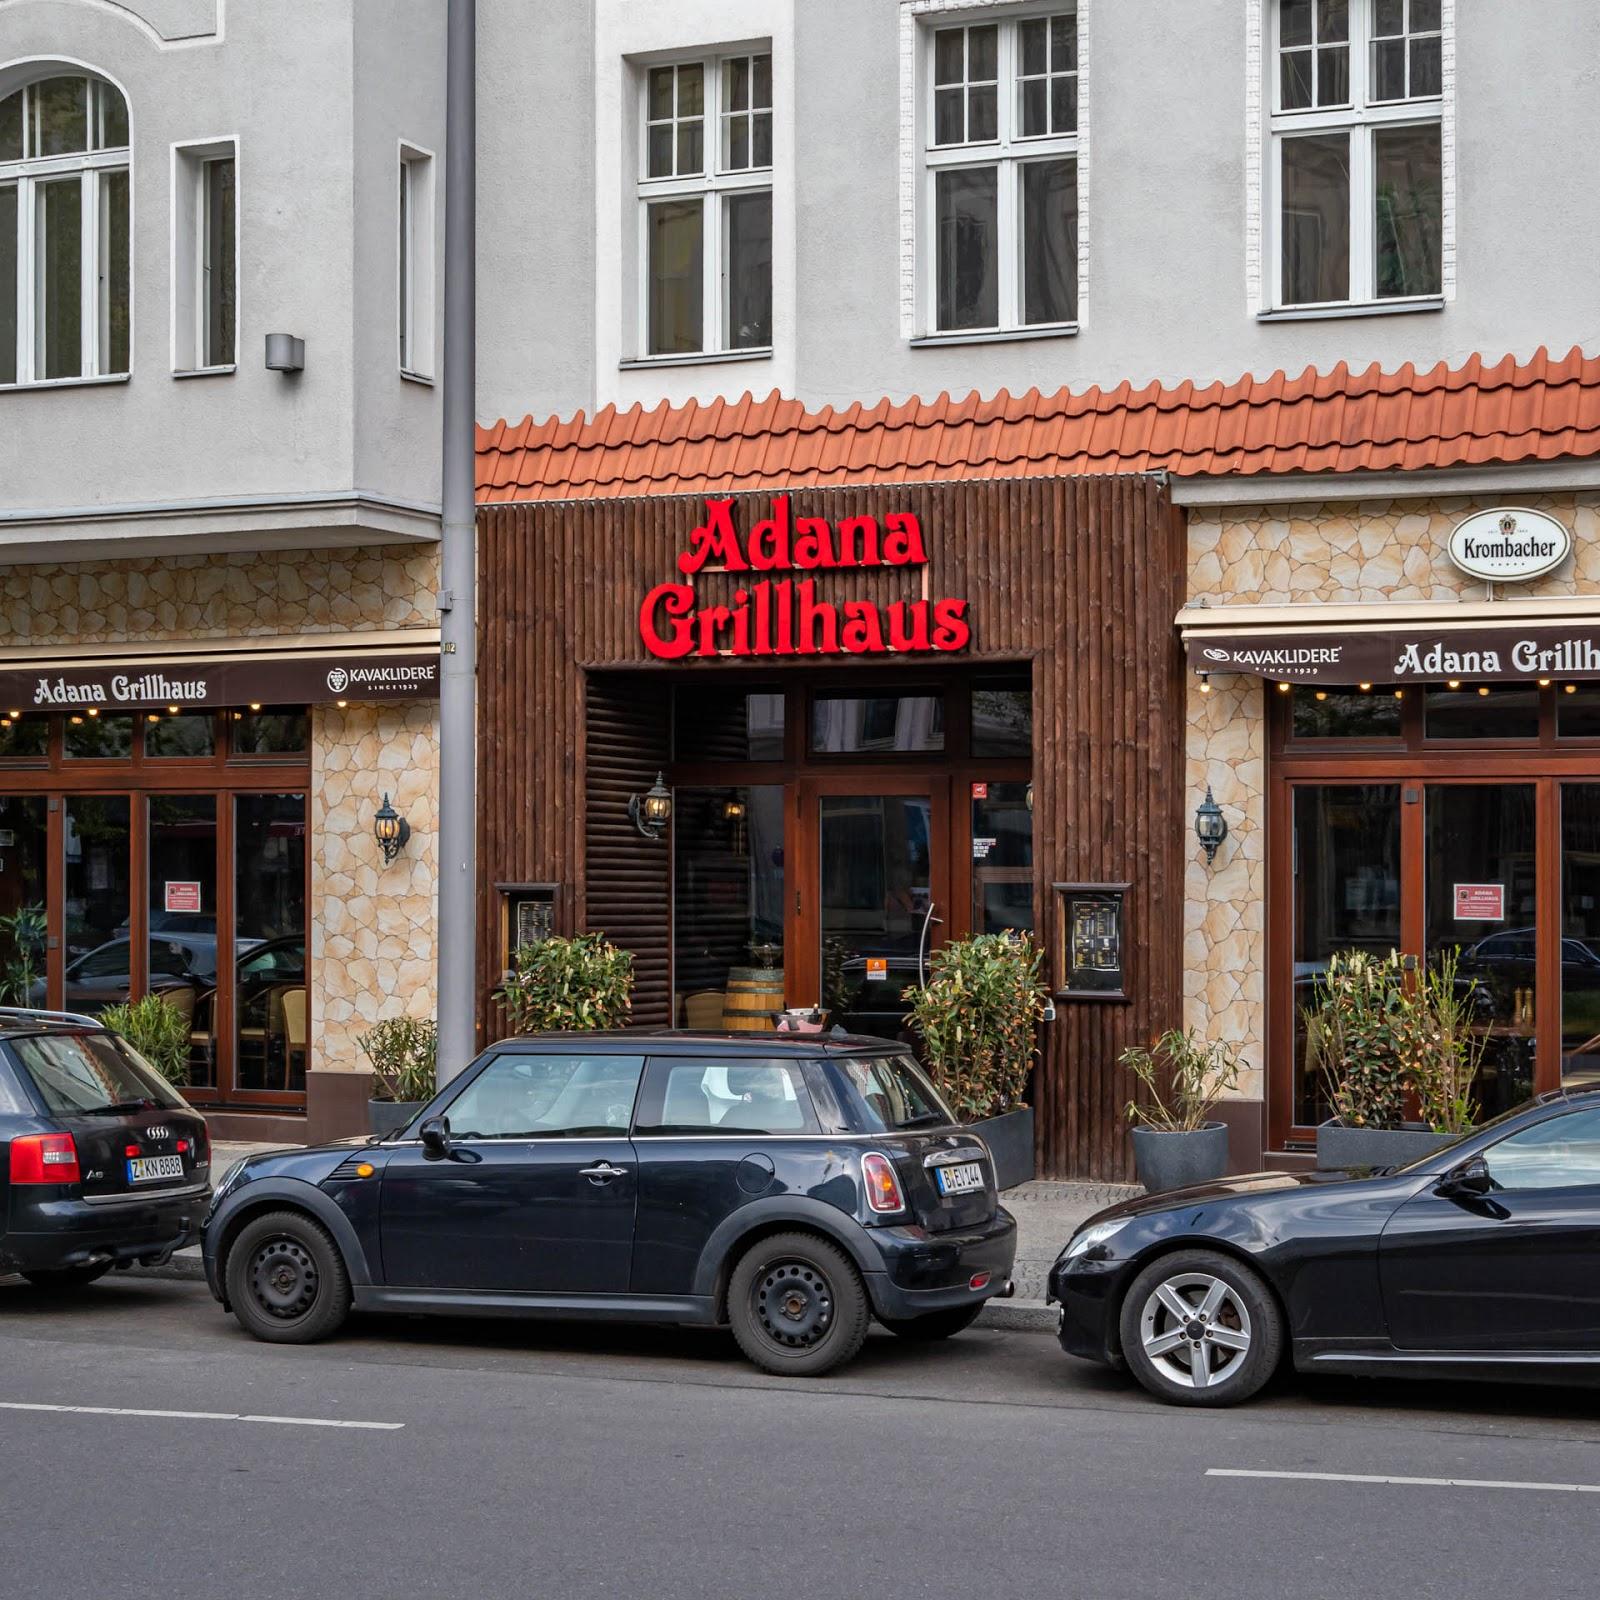 Restaurant "Adana Grillhaus Ku